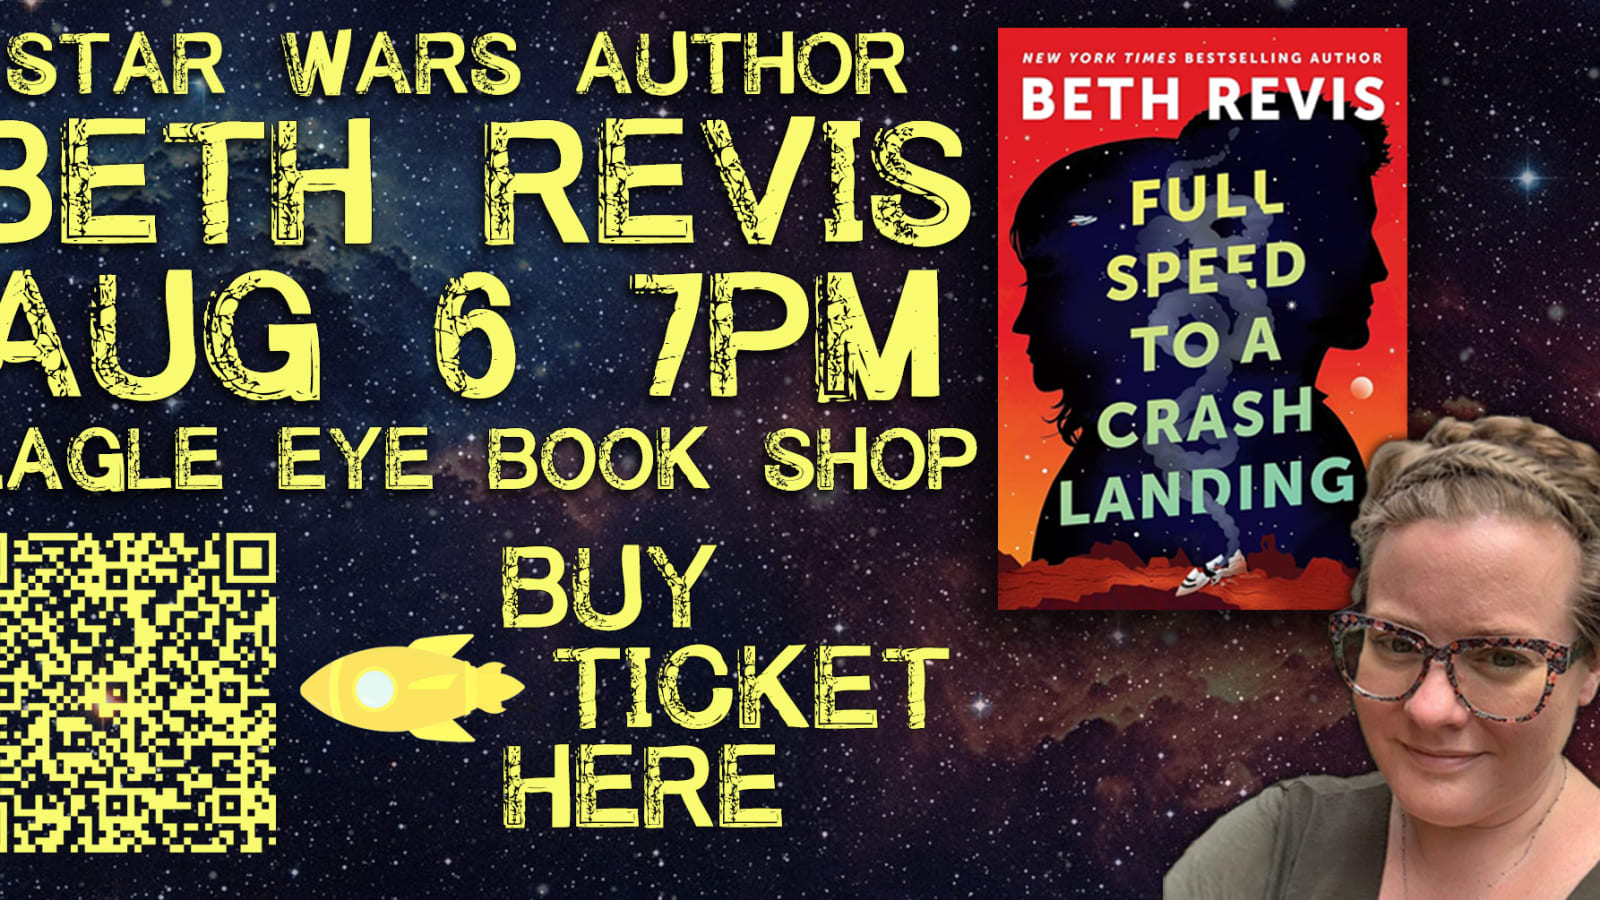 Beth Revis - Full Speed to a Crash Landing